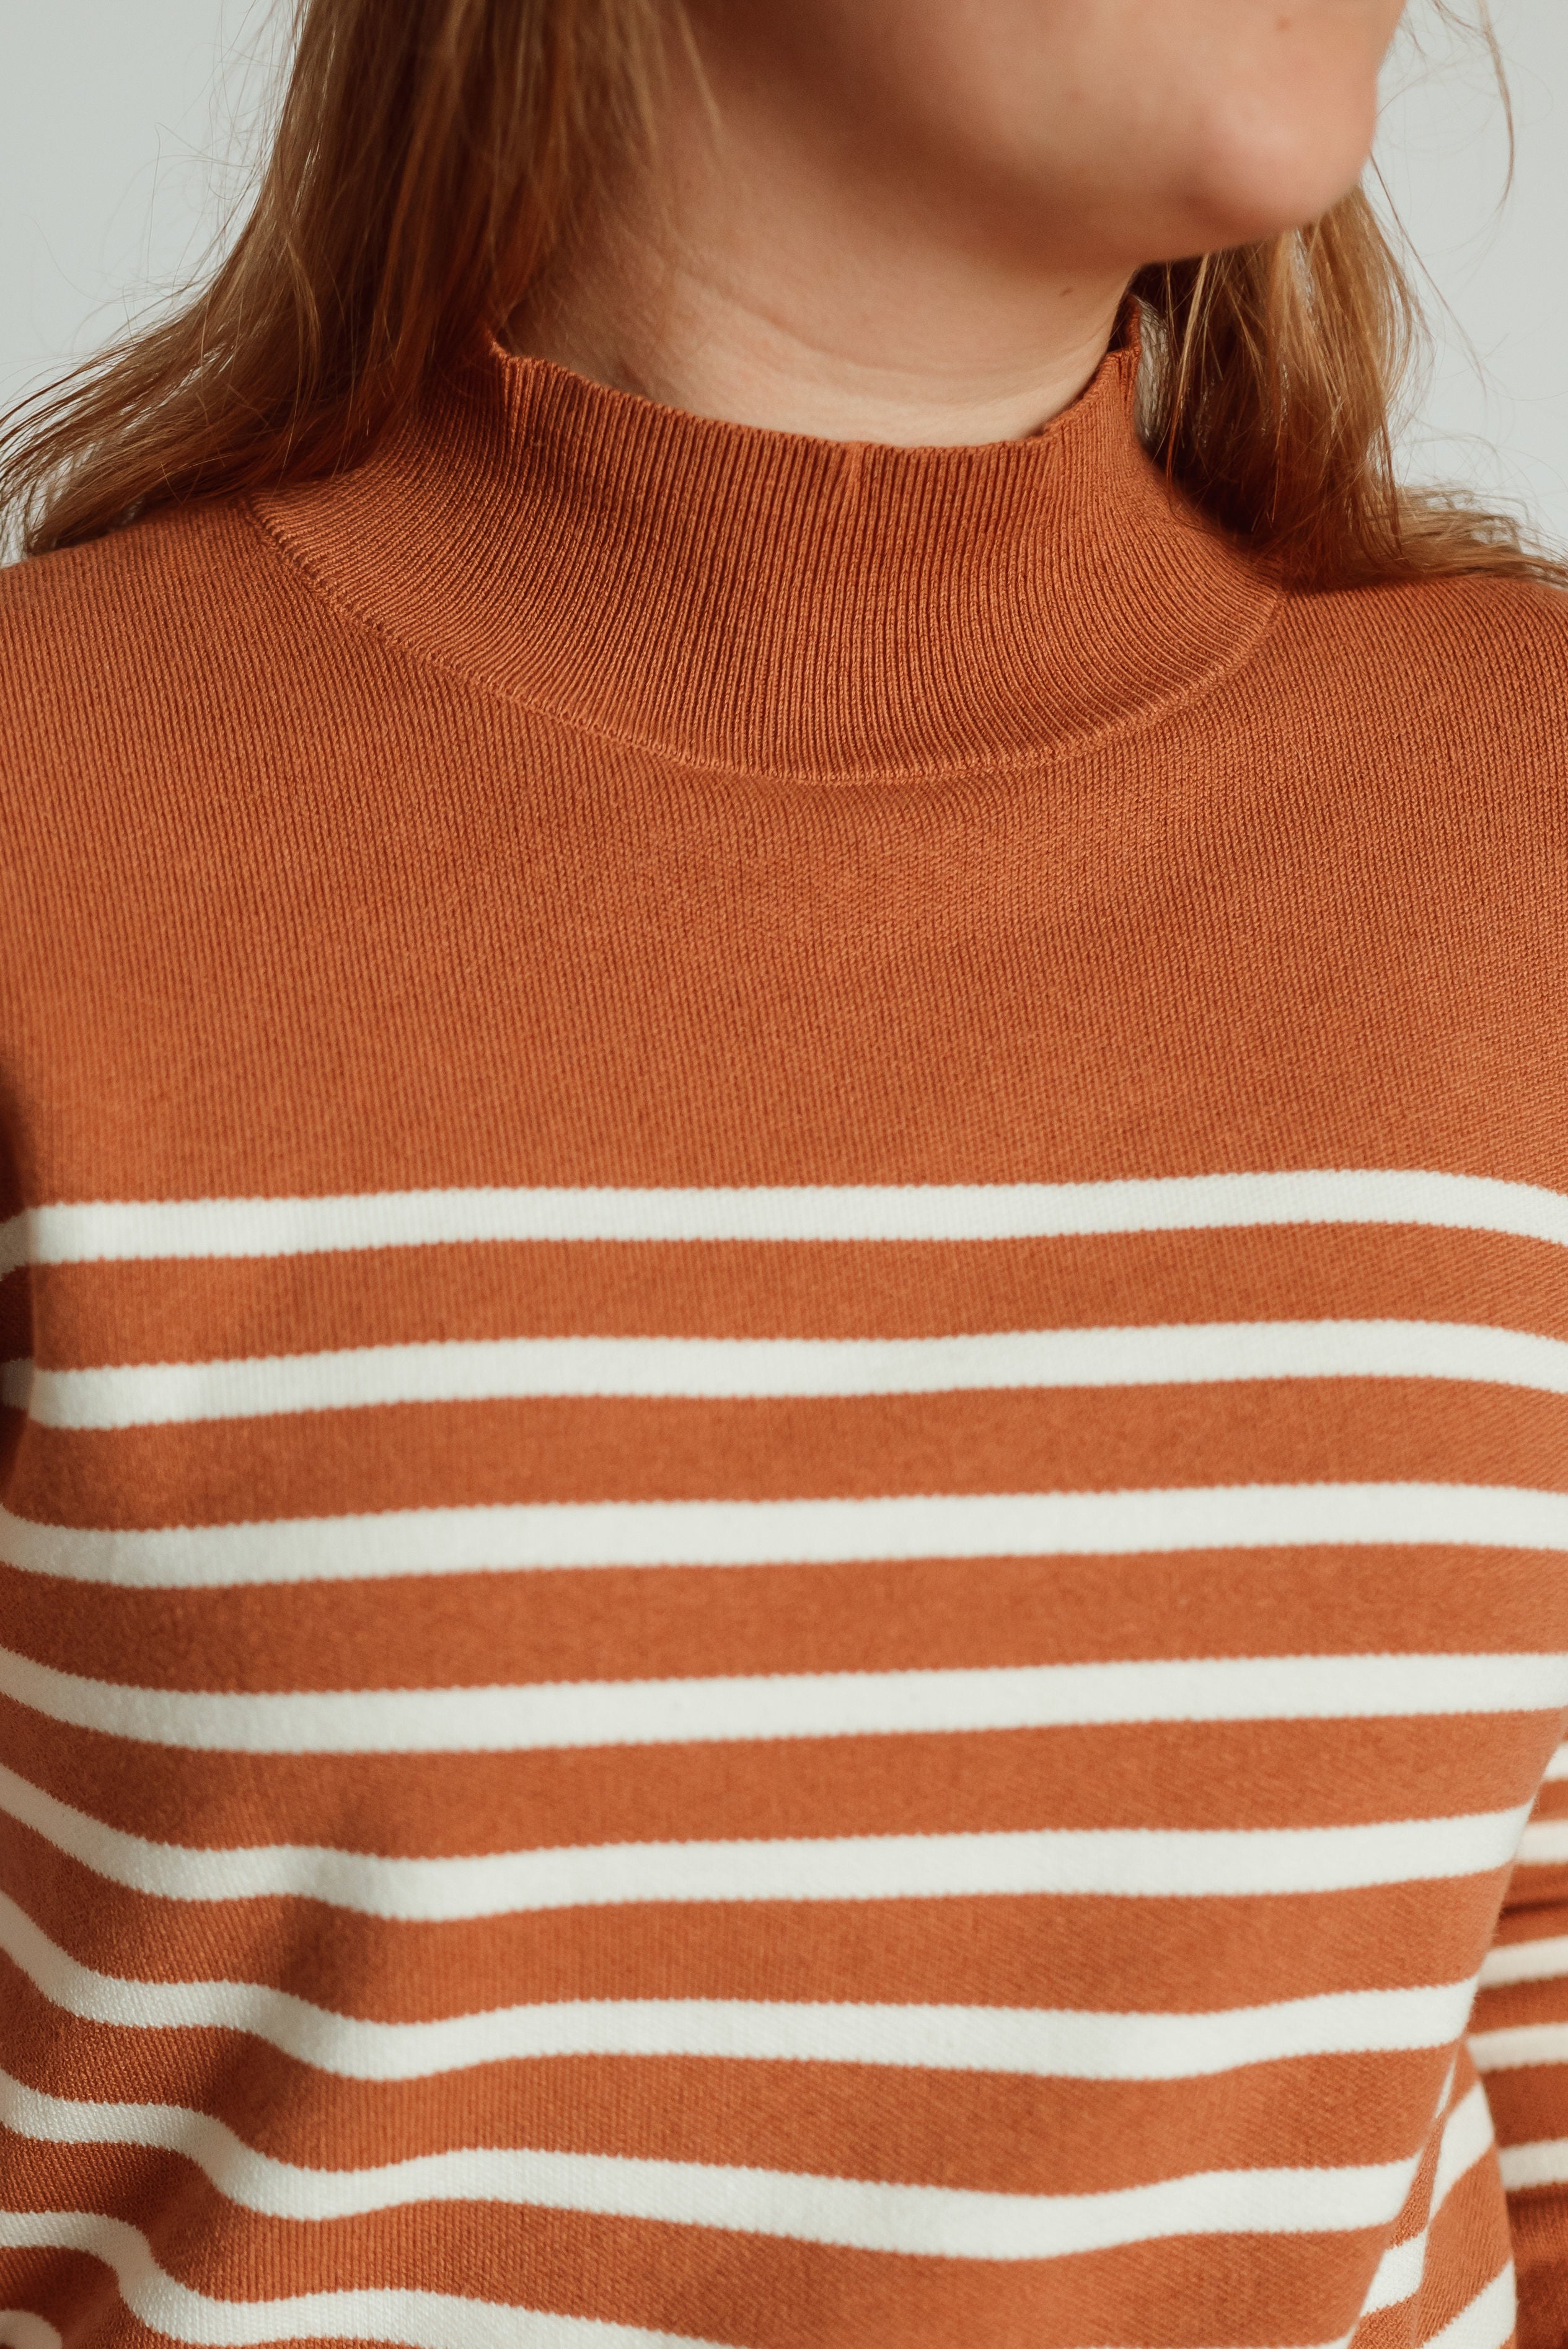 Jasmine Sweater in Camel/White Stripes